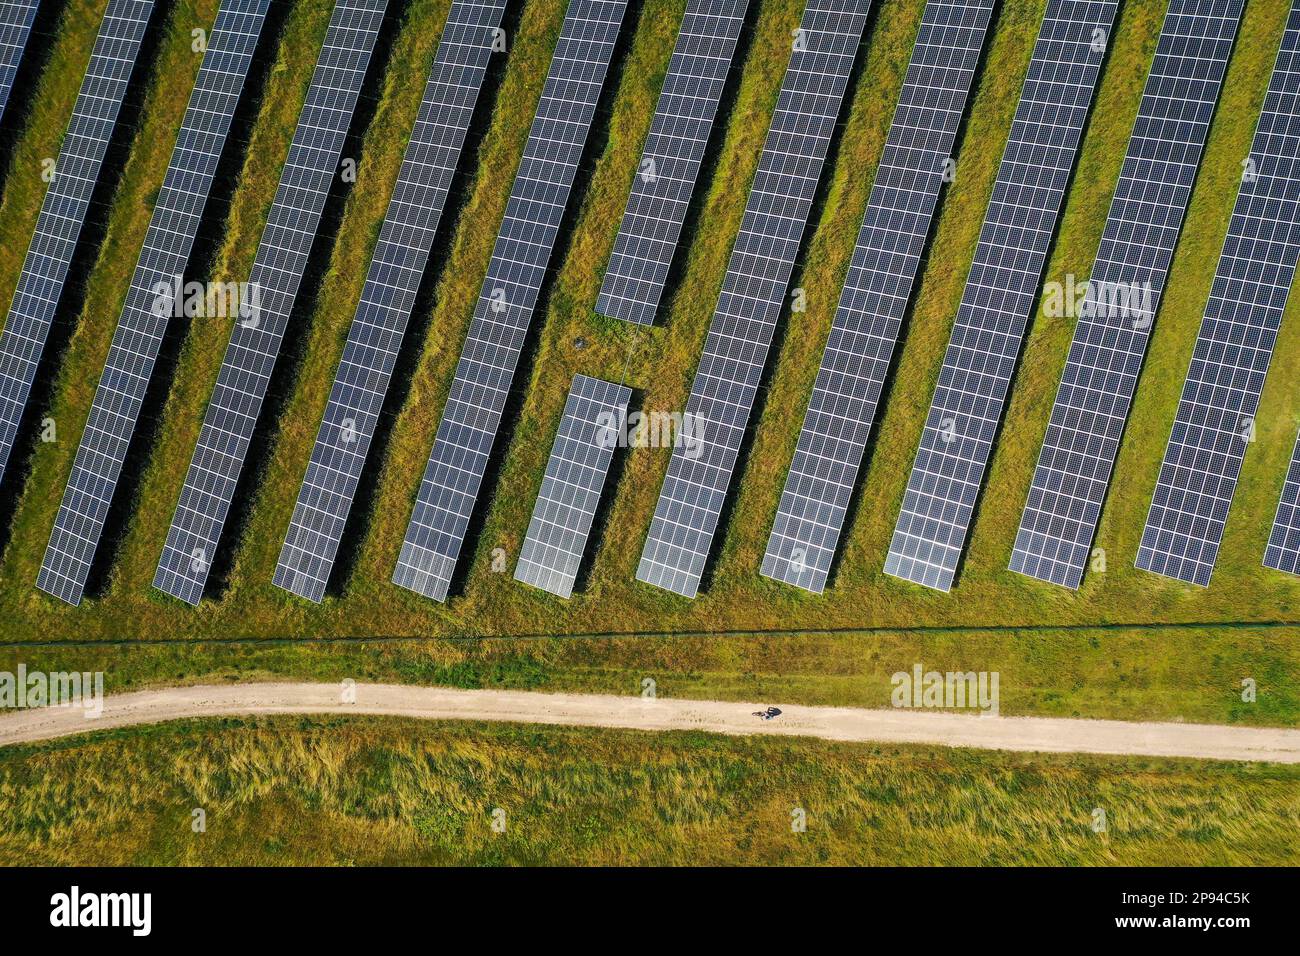 Dortmund, North Rhine-Westphalia, Germany - Deusenberg solar park. The ground-mounted facility is located on a former landfill site in Dortmund Deusen Stock Photo